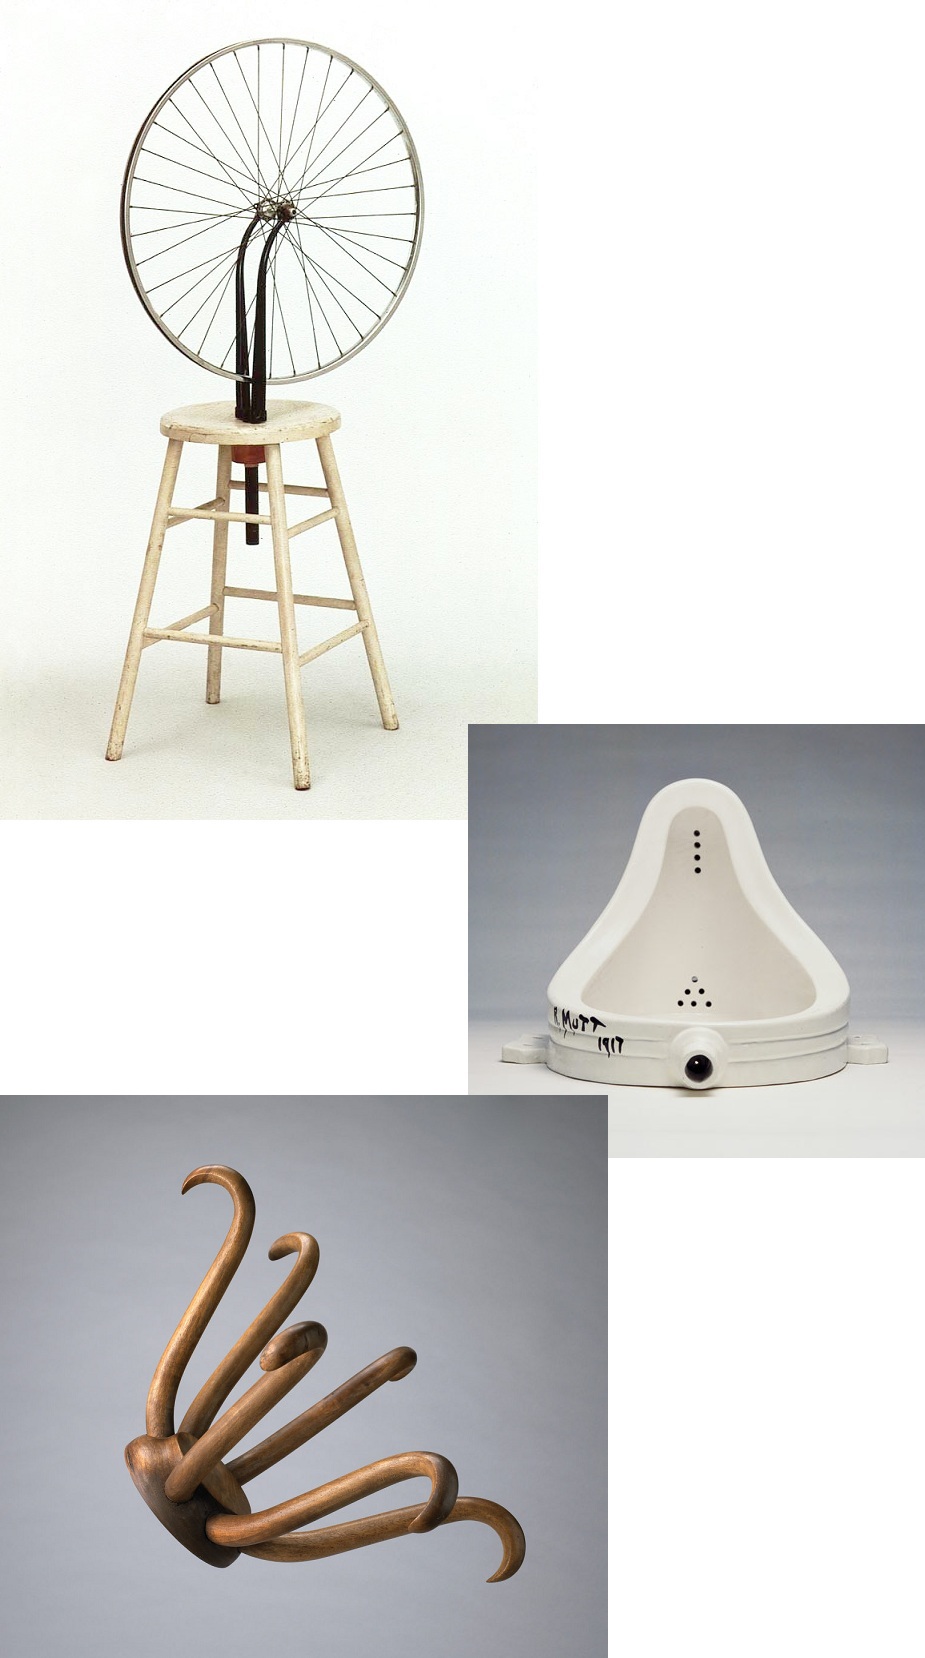 Ready-mades de Marcel Duchamp: Roda de Bicicleta, A Fonte e Hat rack